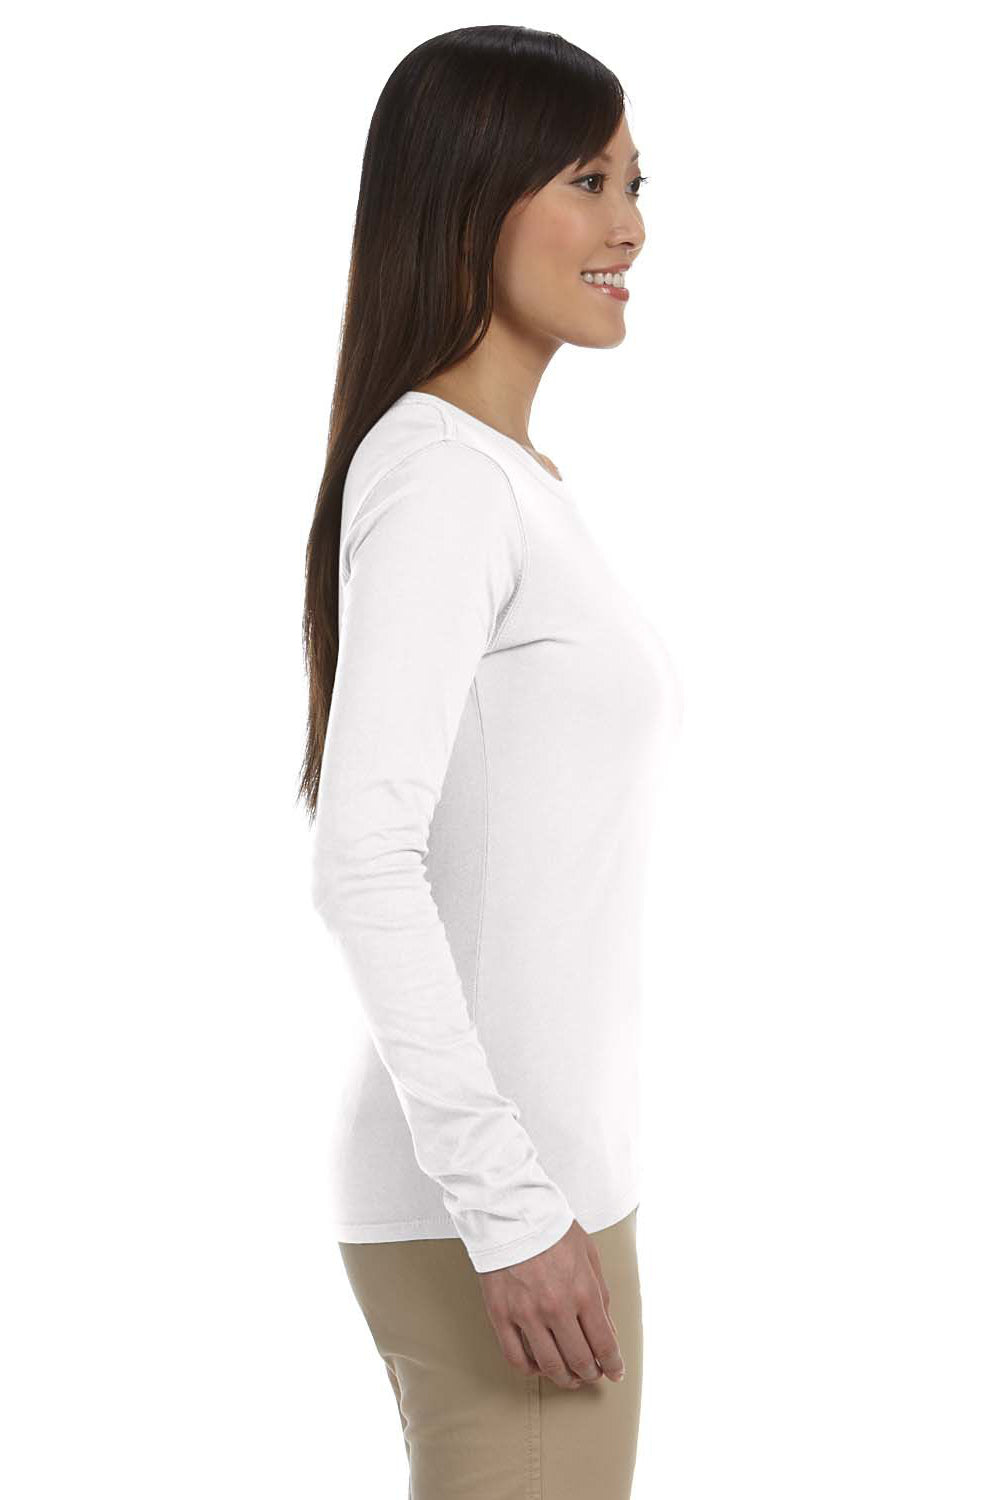 Econscious EC3500 Womens Long Sleeve Crewneck T-Shirt White Side